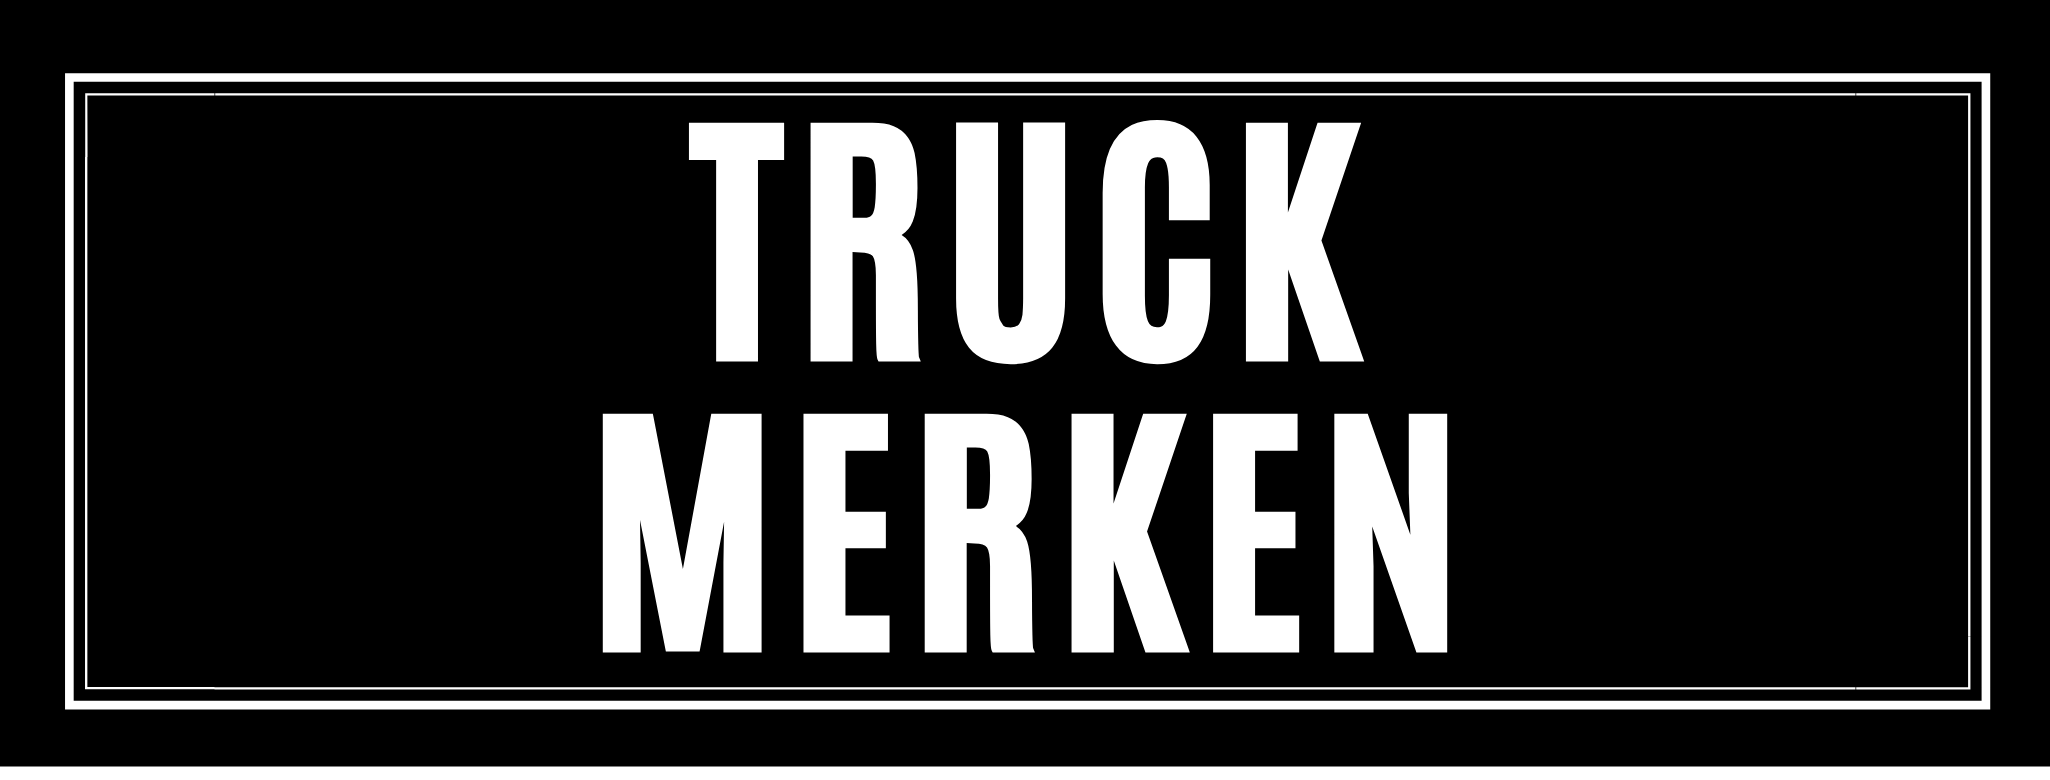 Truck merken stickers